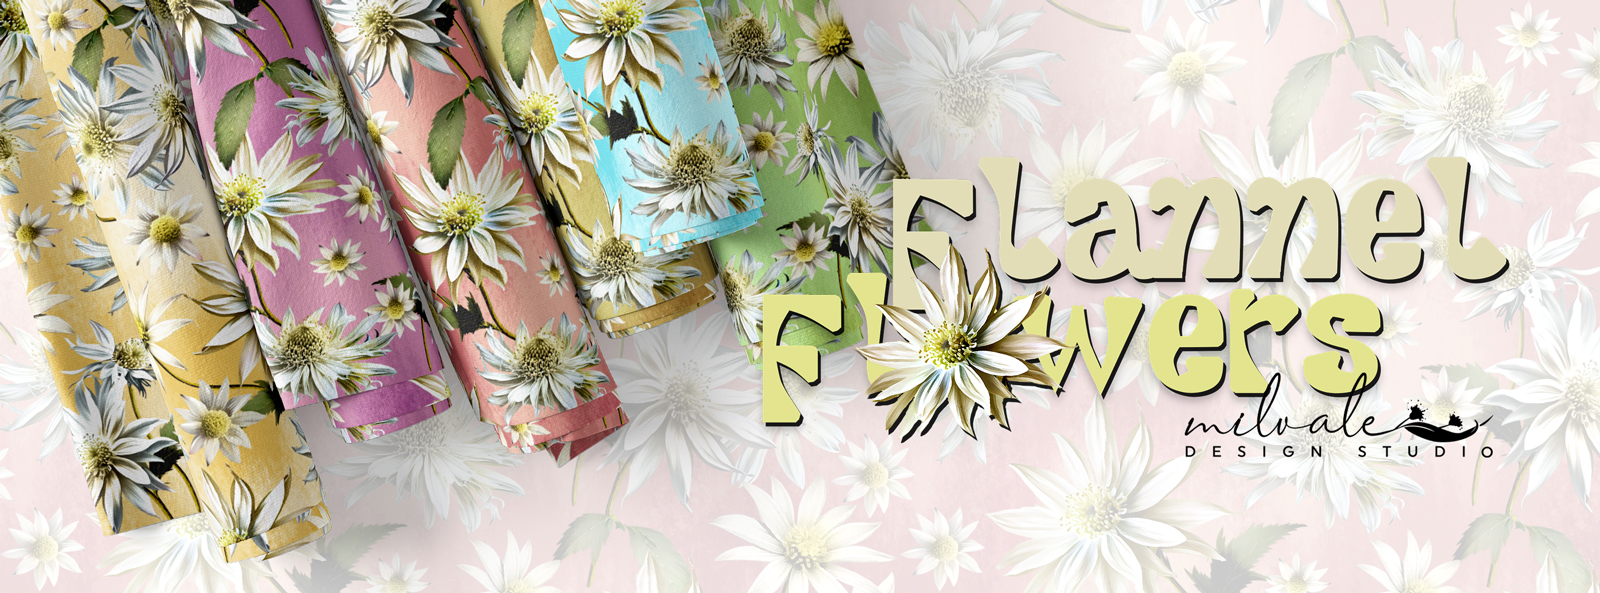 Flannel Flowers - Website Banner